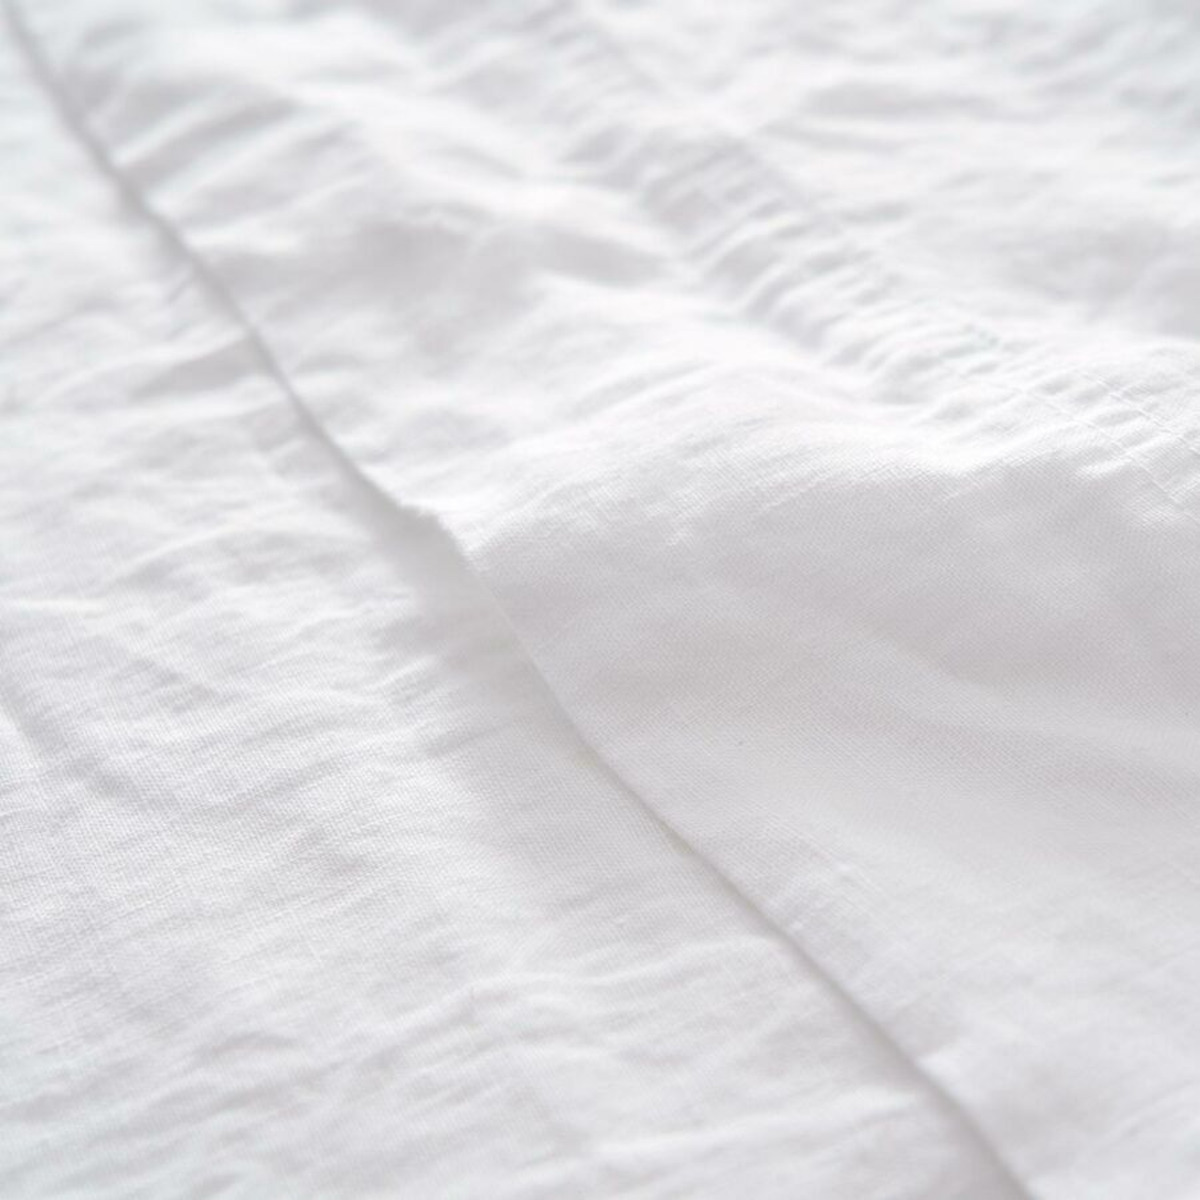 Fabric Closeup of White Yves Delorme Originel Bedding